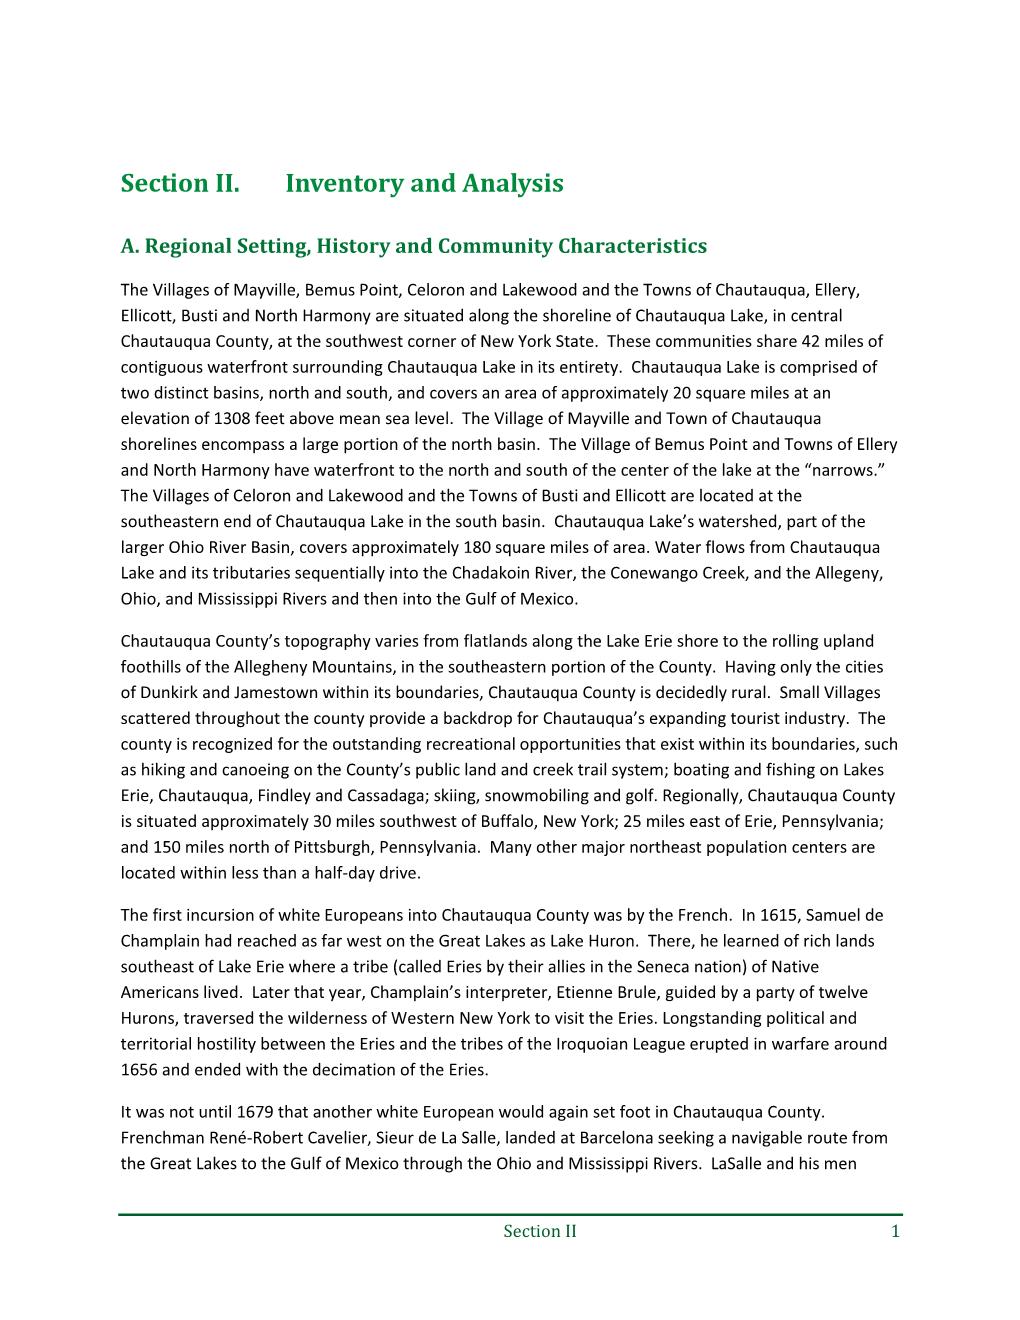 Chautauqua Lake Section II. Inventory and Analysis